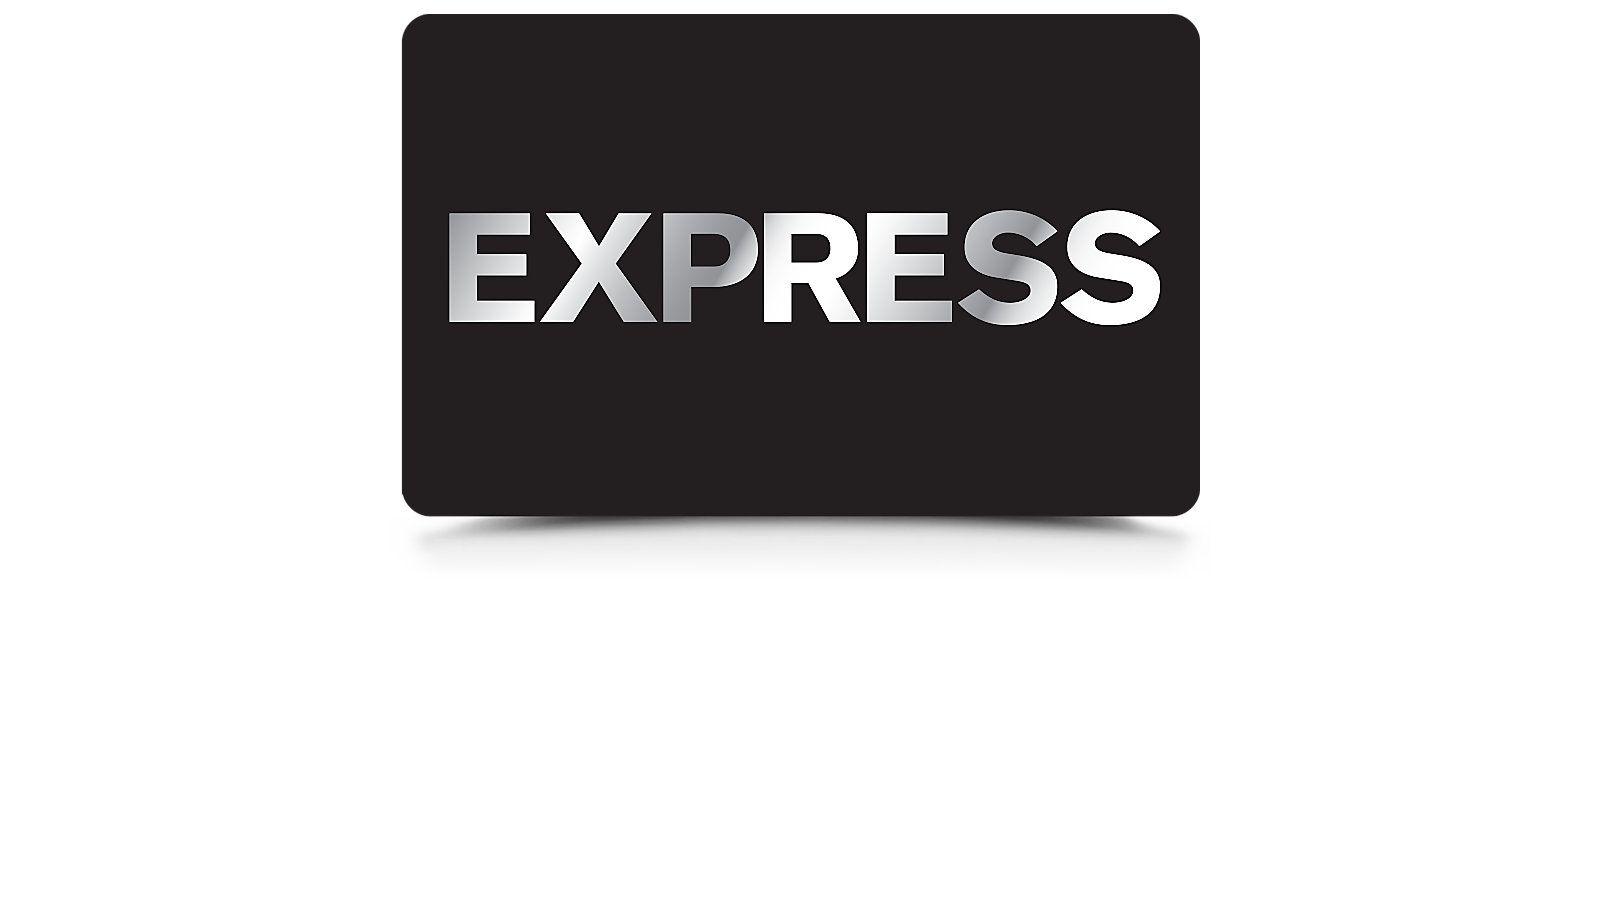 Express Clothing Store Logo - LogoDix